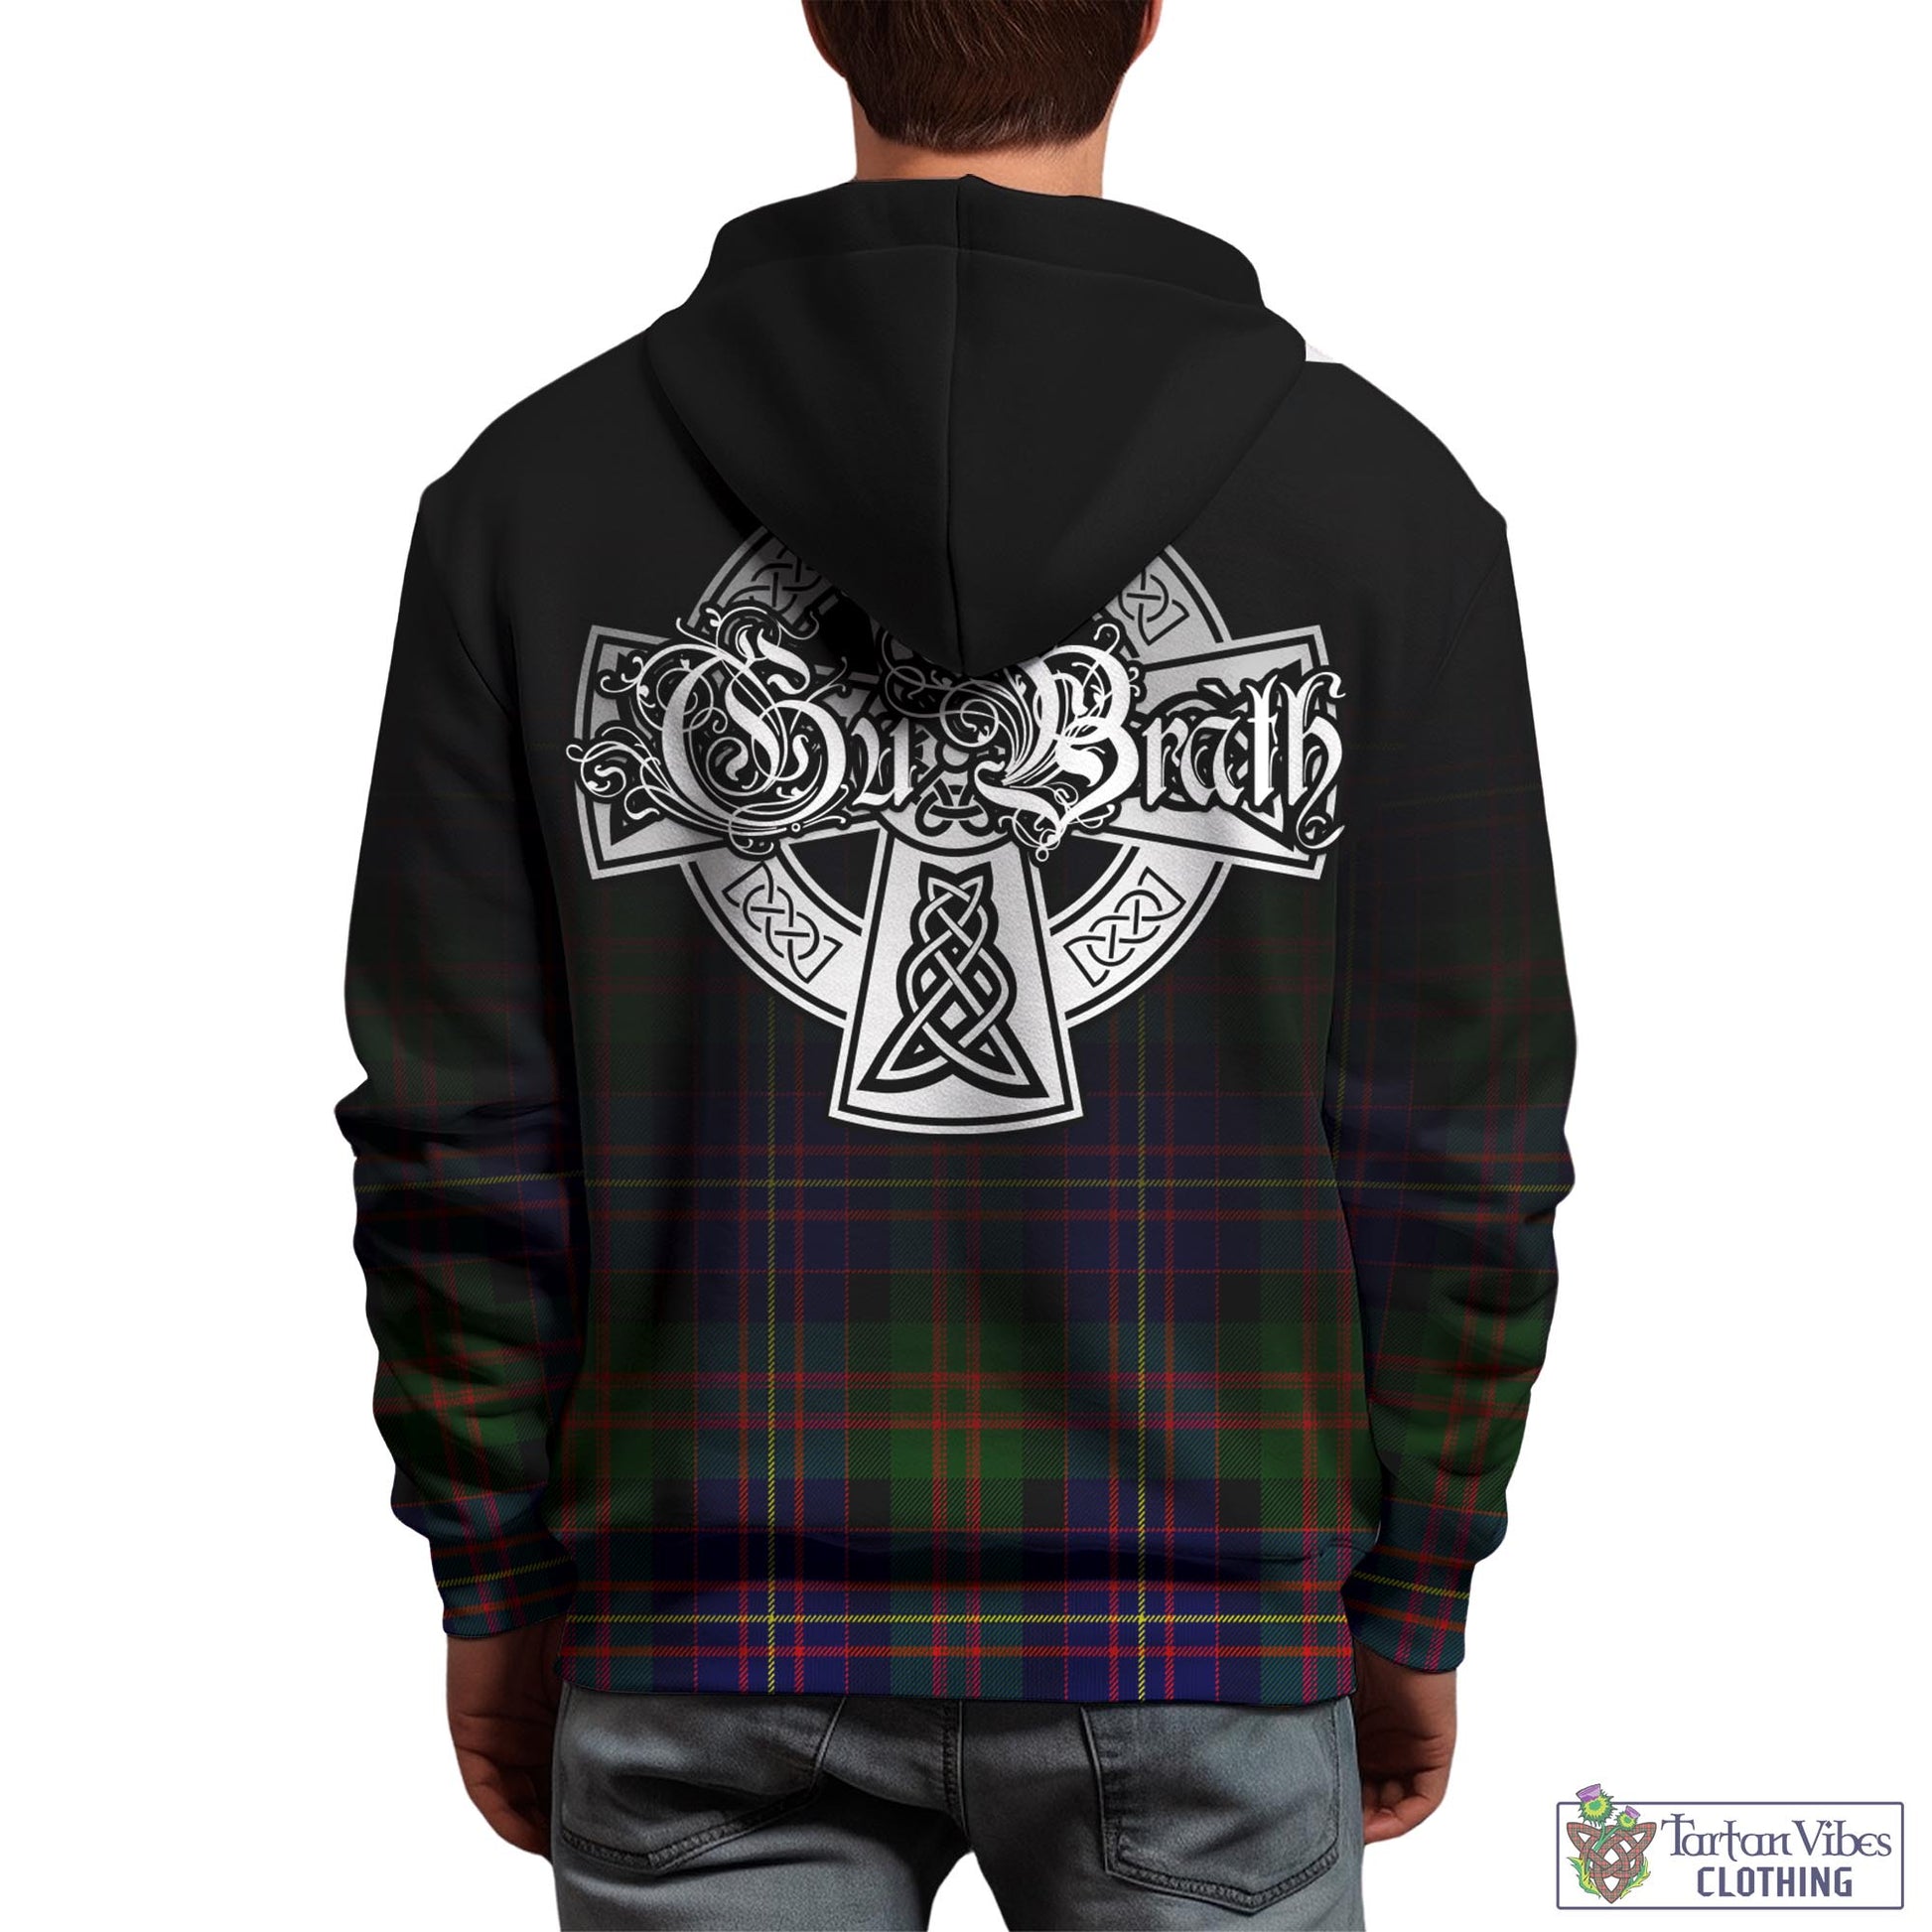 Tartan Vibes Clothing Chalmers Modern Tartan Hoodie Featuring Alba Gu Brath Family Crest Celtic Inspired